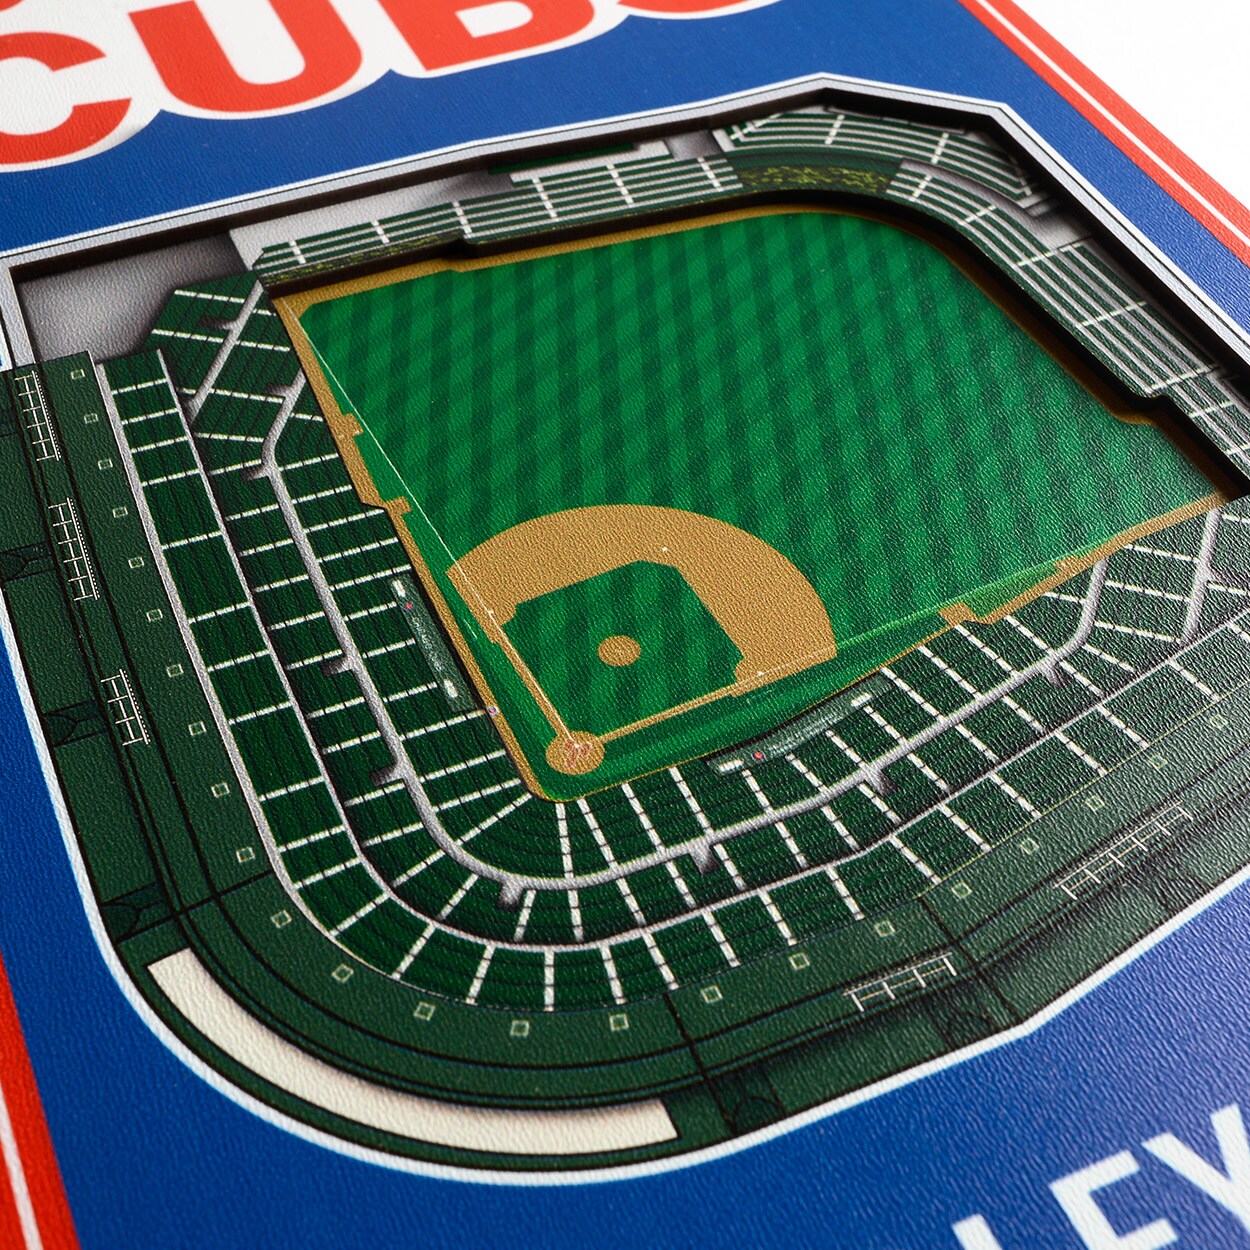 8 x 32 MLB Kansas City Royals 3D Stadium Banner